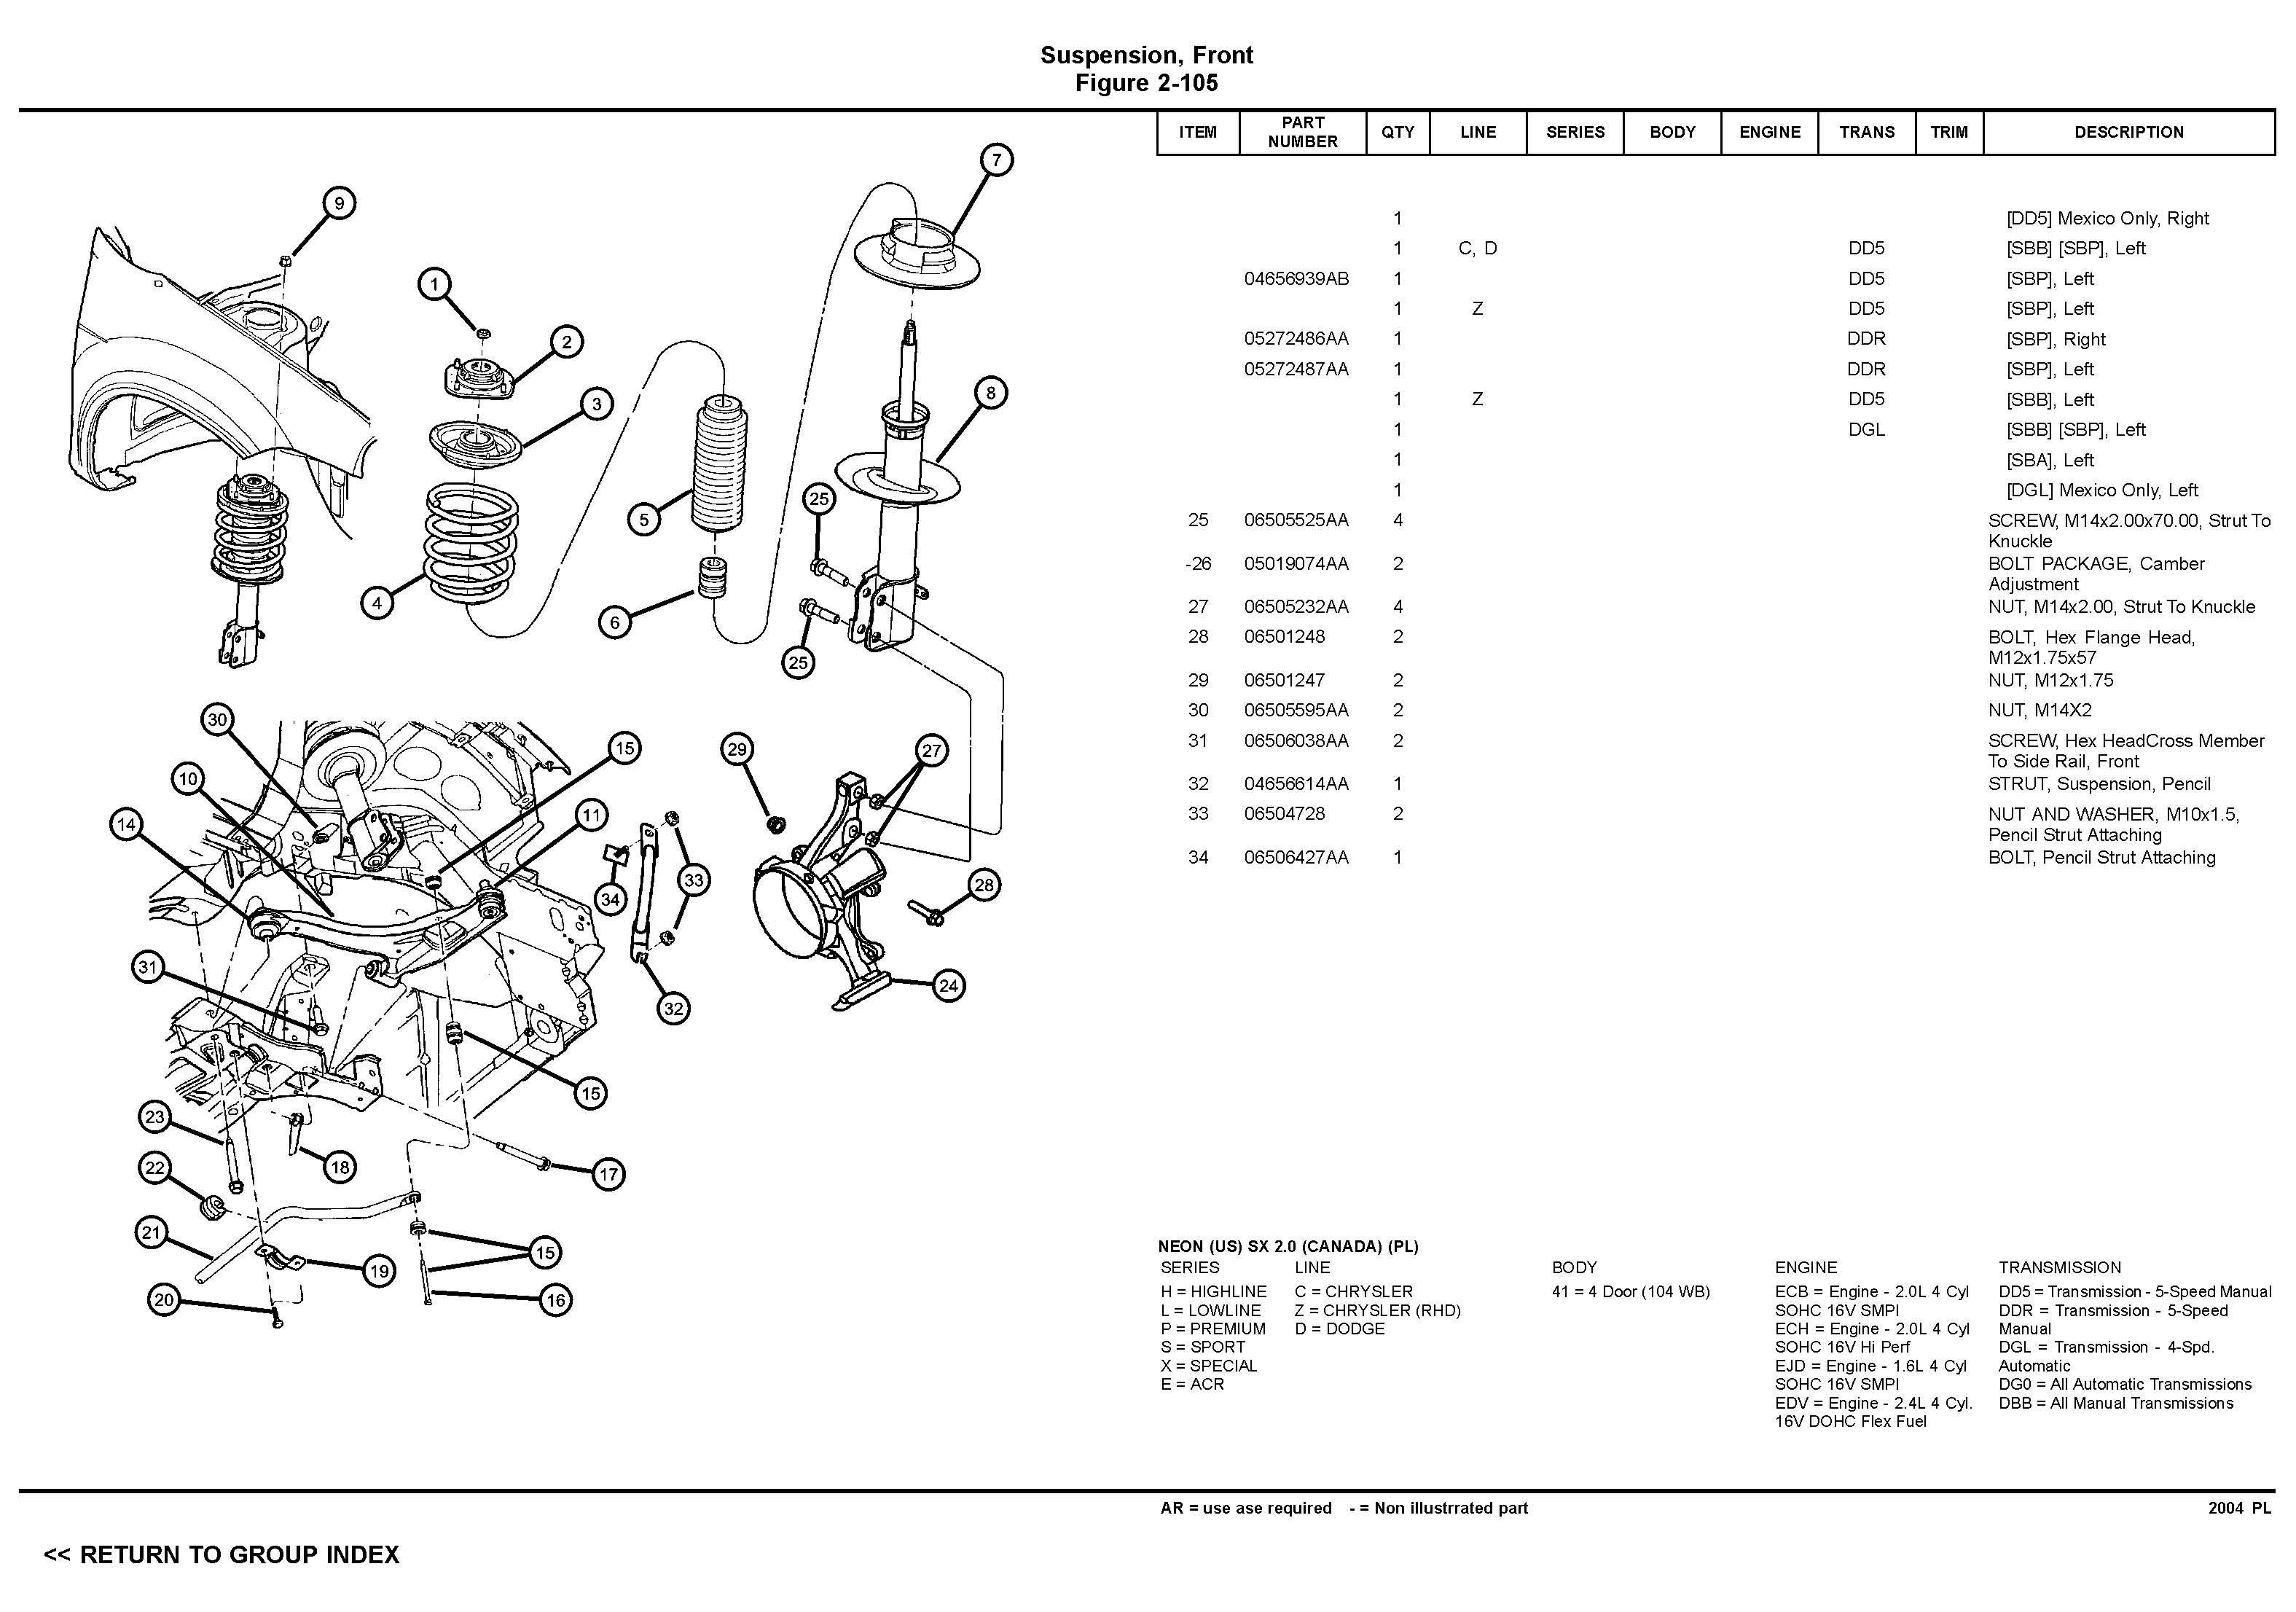 Rear Suspension Parts Diagram Srt 4 Suspension Faq Dodge Srt forum Of Rear Suspension Parts Diagram